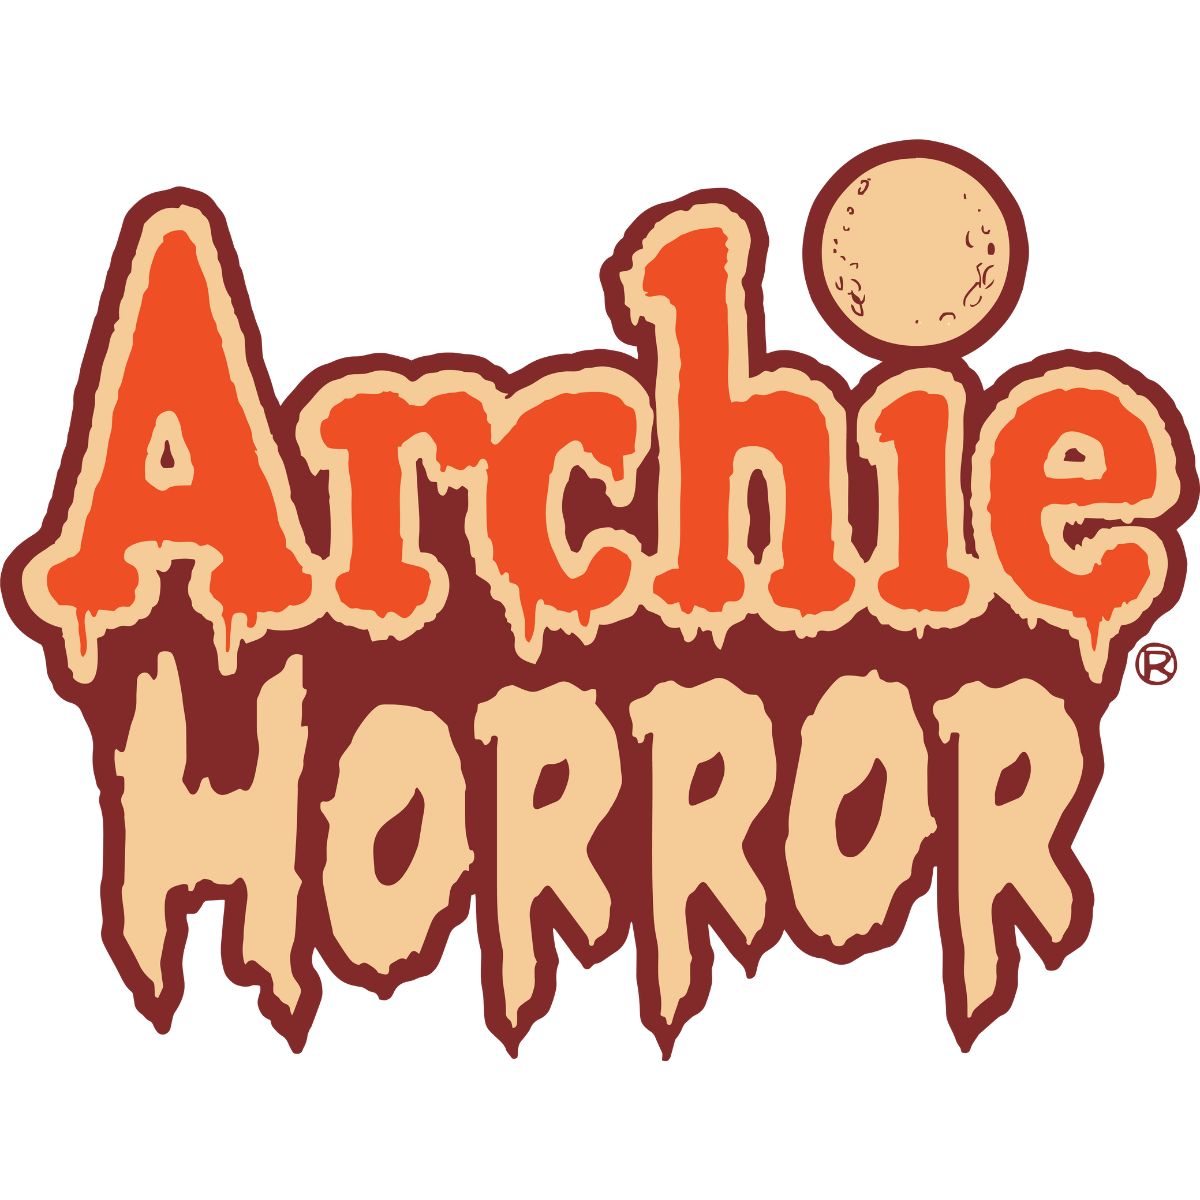 Archie Horror